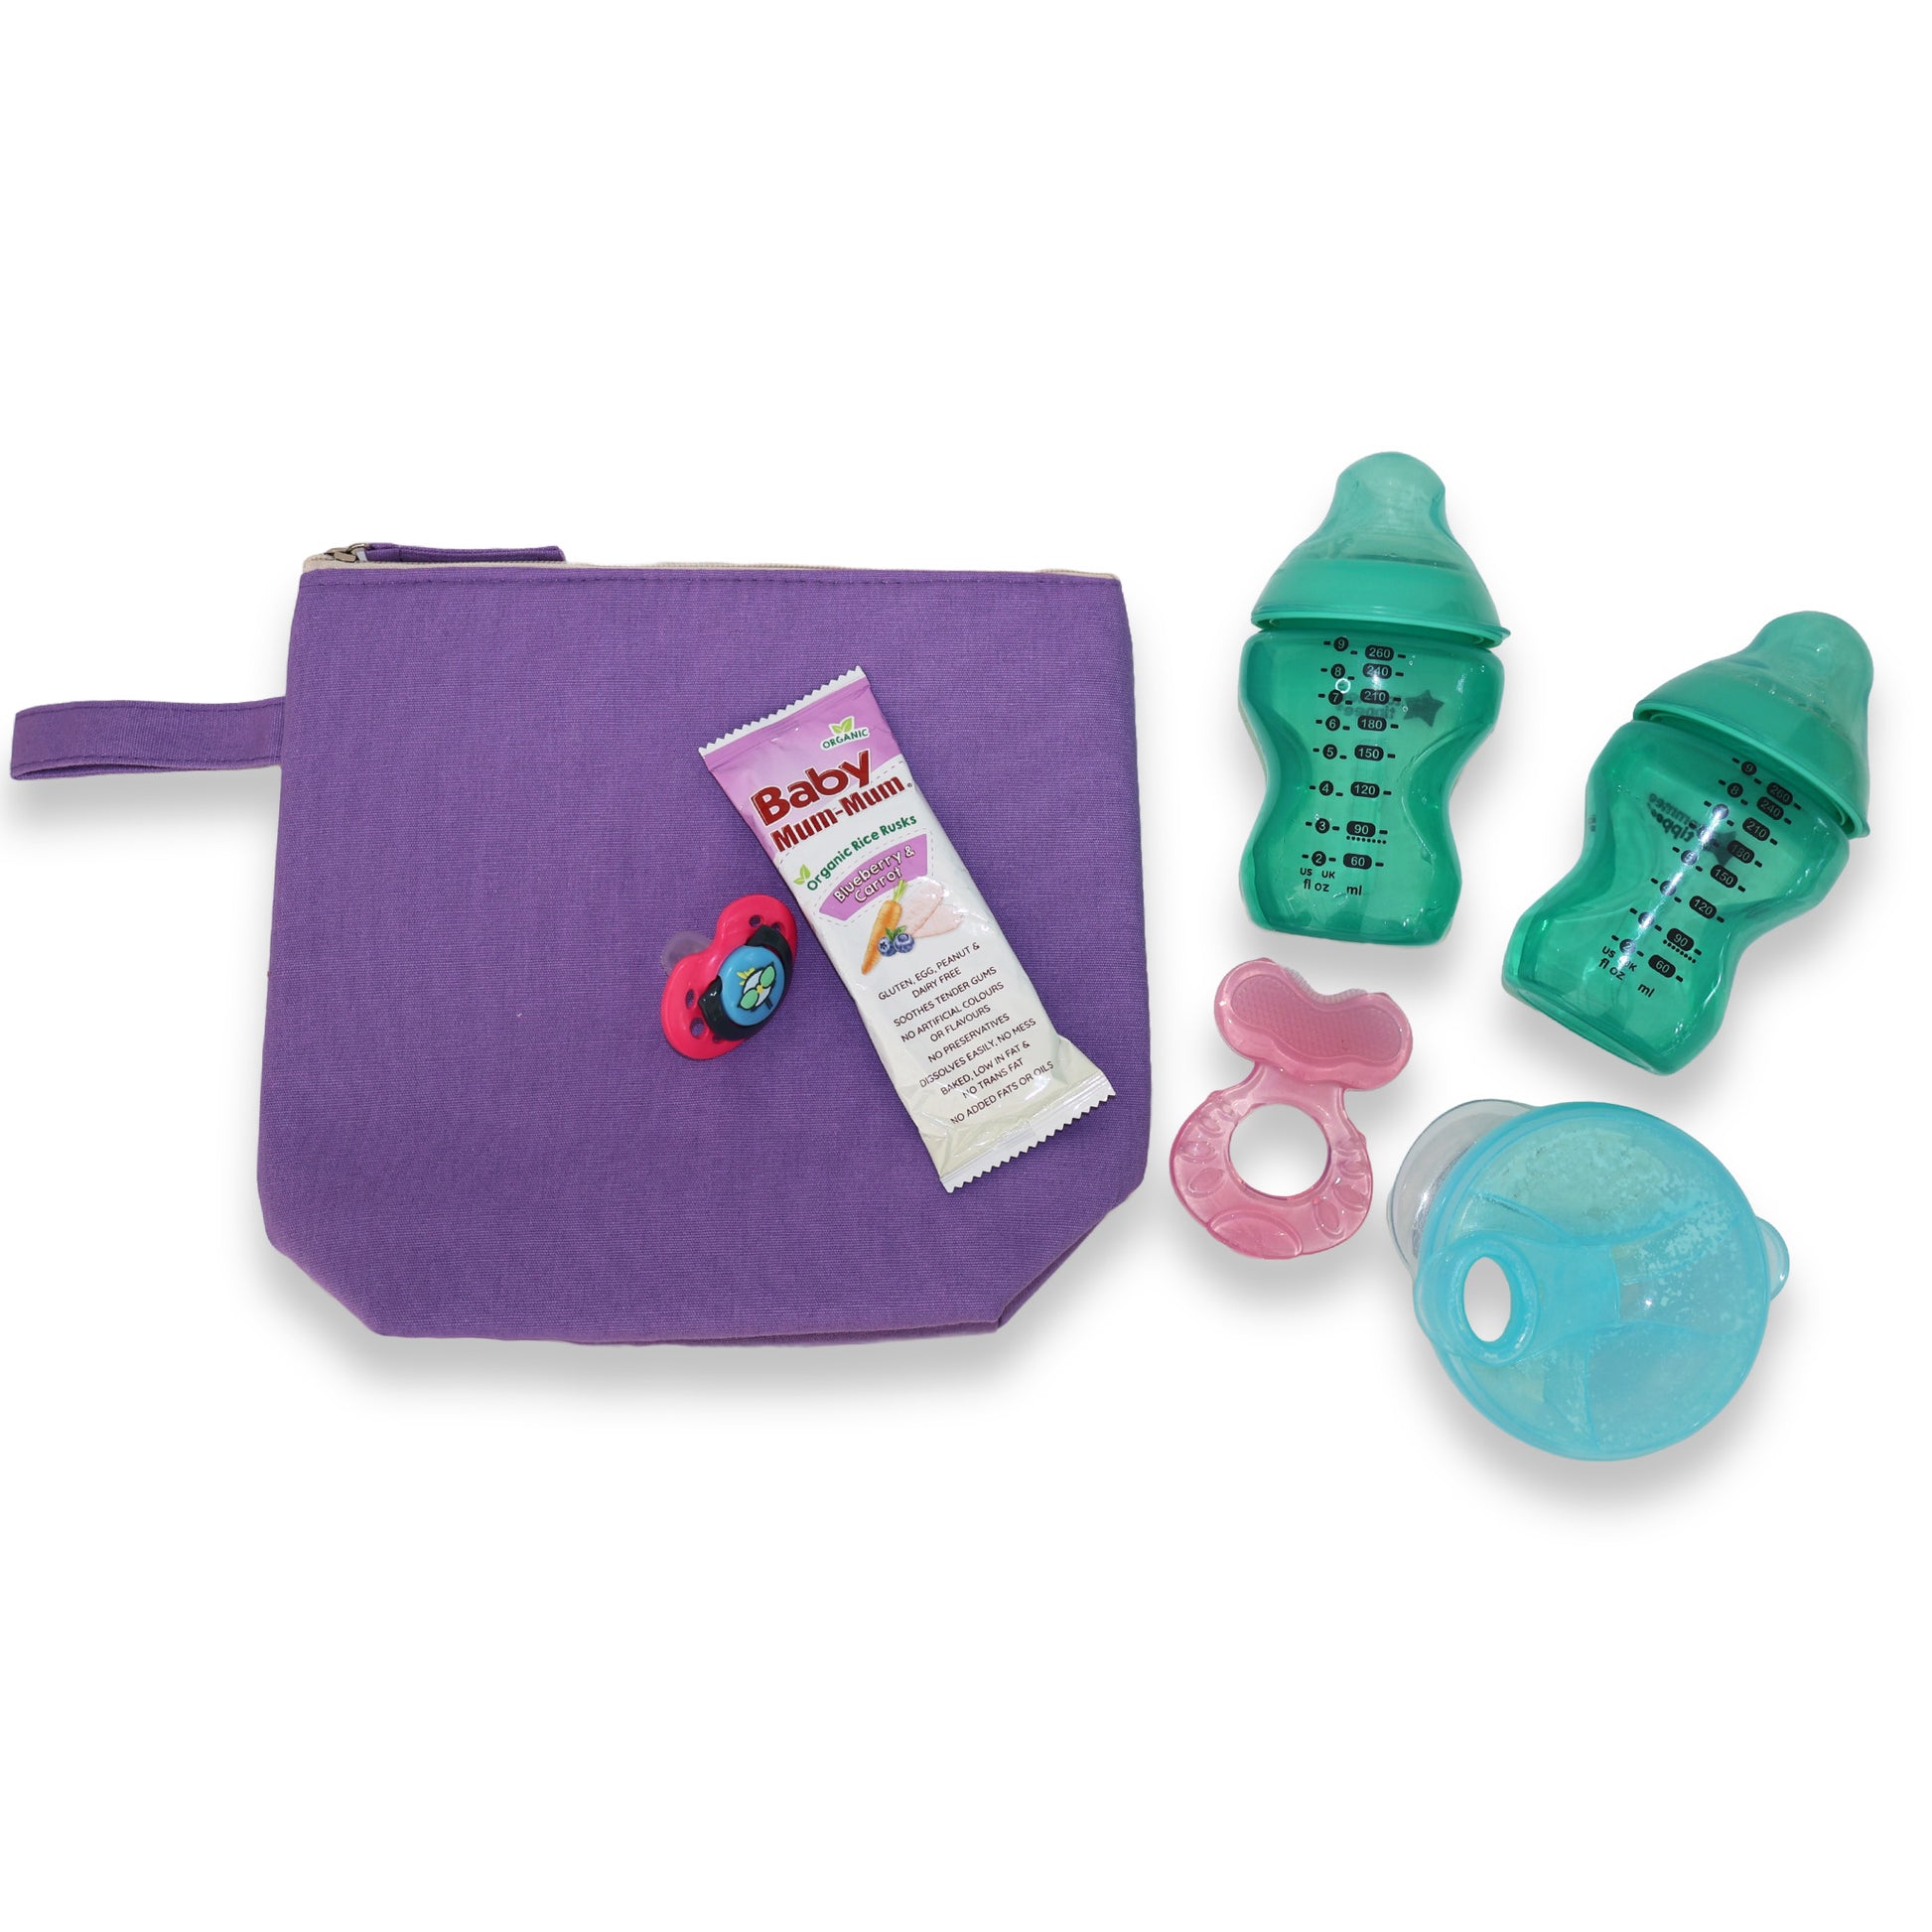 Cooler bag in purple fits 2 bottles, formula, snacks, dummy and teether.